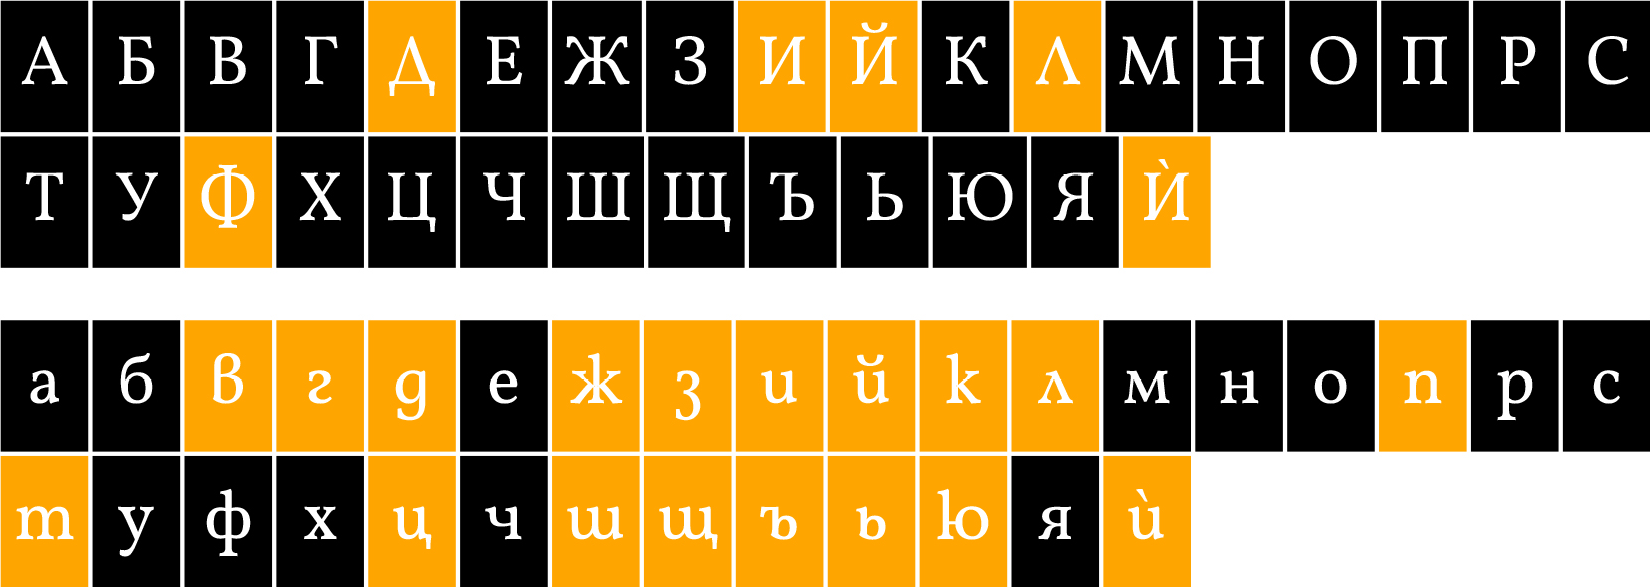 Cyrillic Alphabets Of Slavic Languages